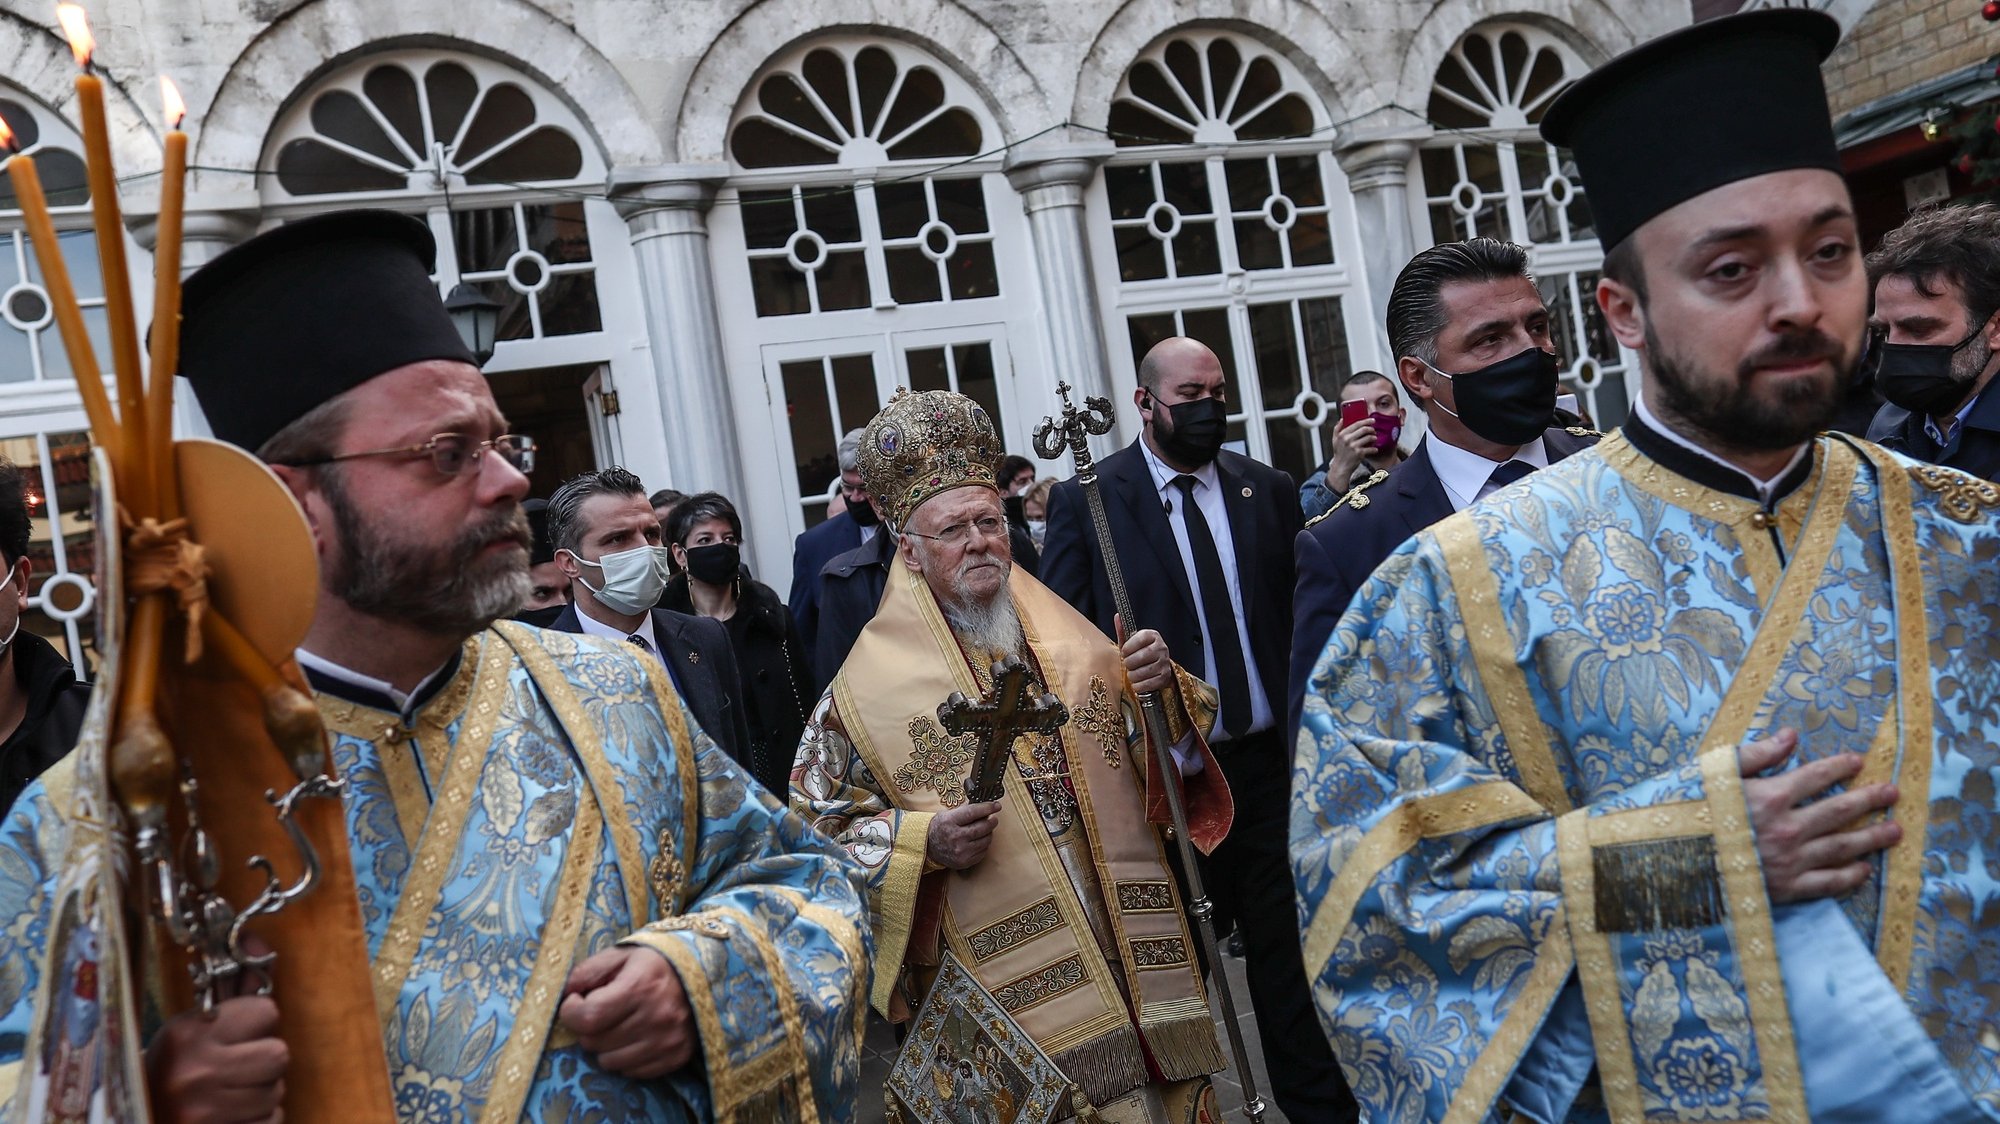 epa08921817 Greek Orthodox Ecumenical Patriarch Bartholomew I (C) of Constantinople leads the service during the Epiphany Day ceremony in Istanbul, Turkey, 06 January 2021.  EPA/SEDAT SUNA